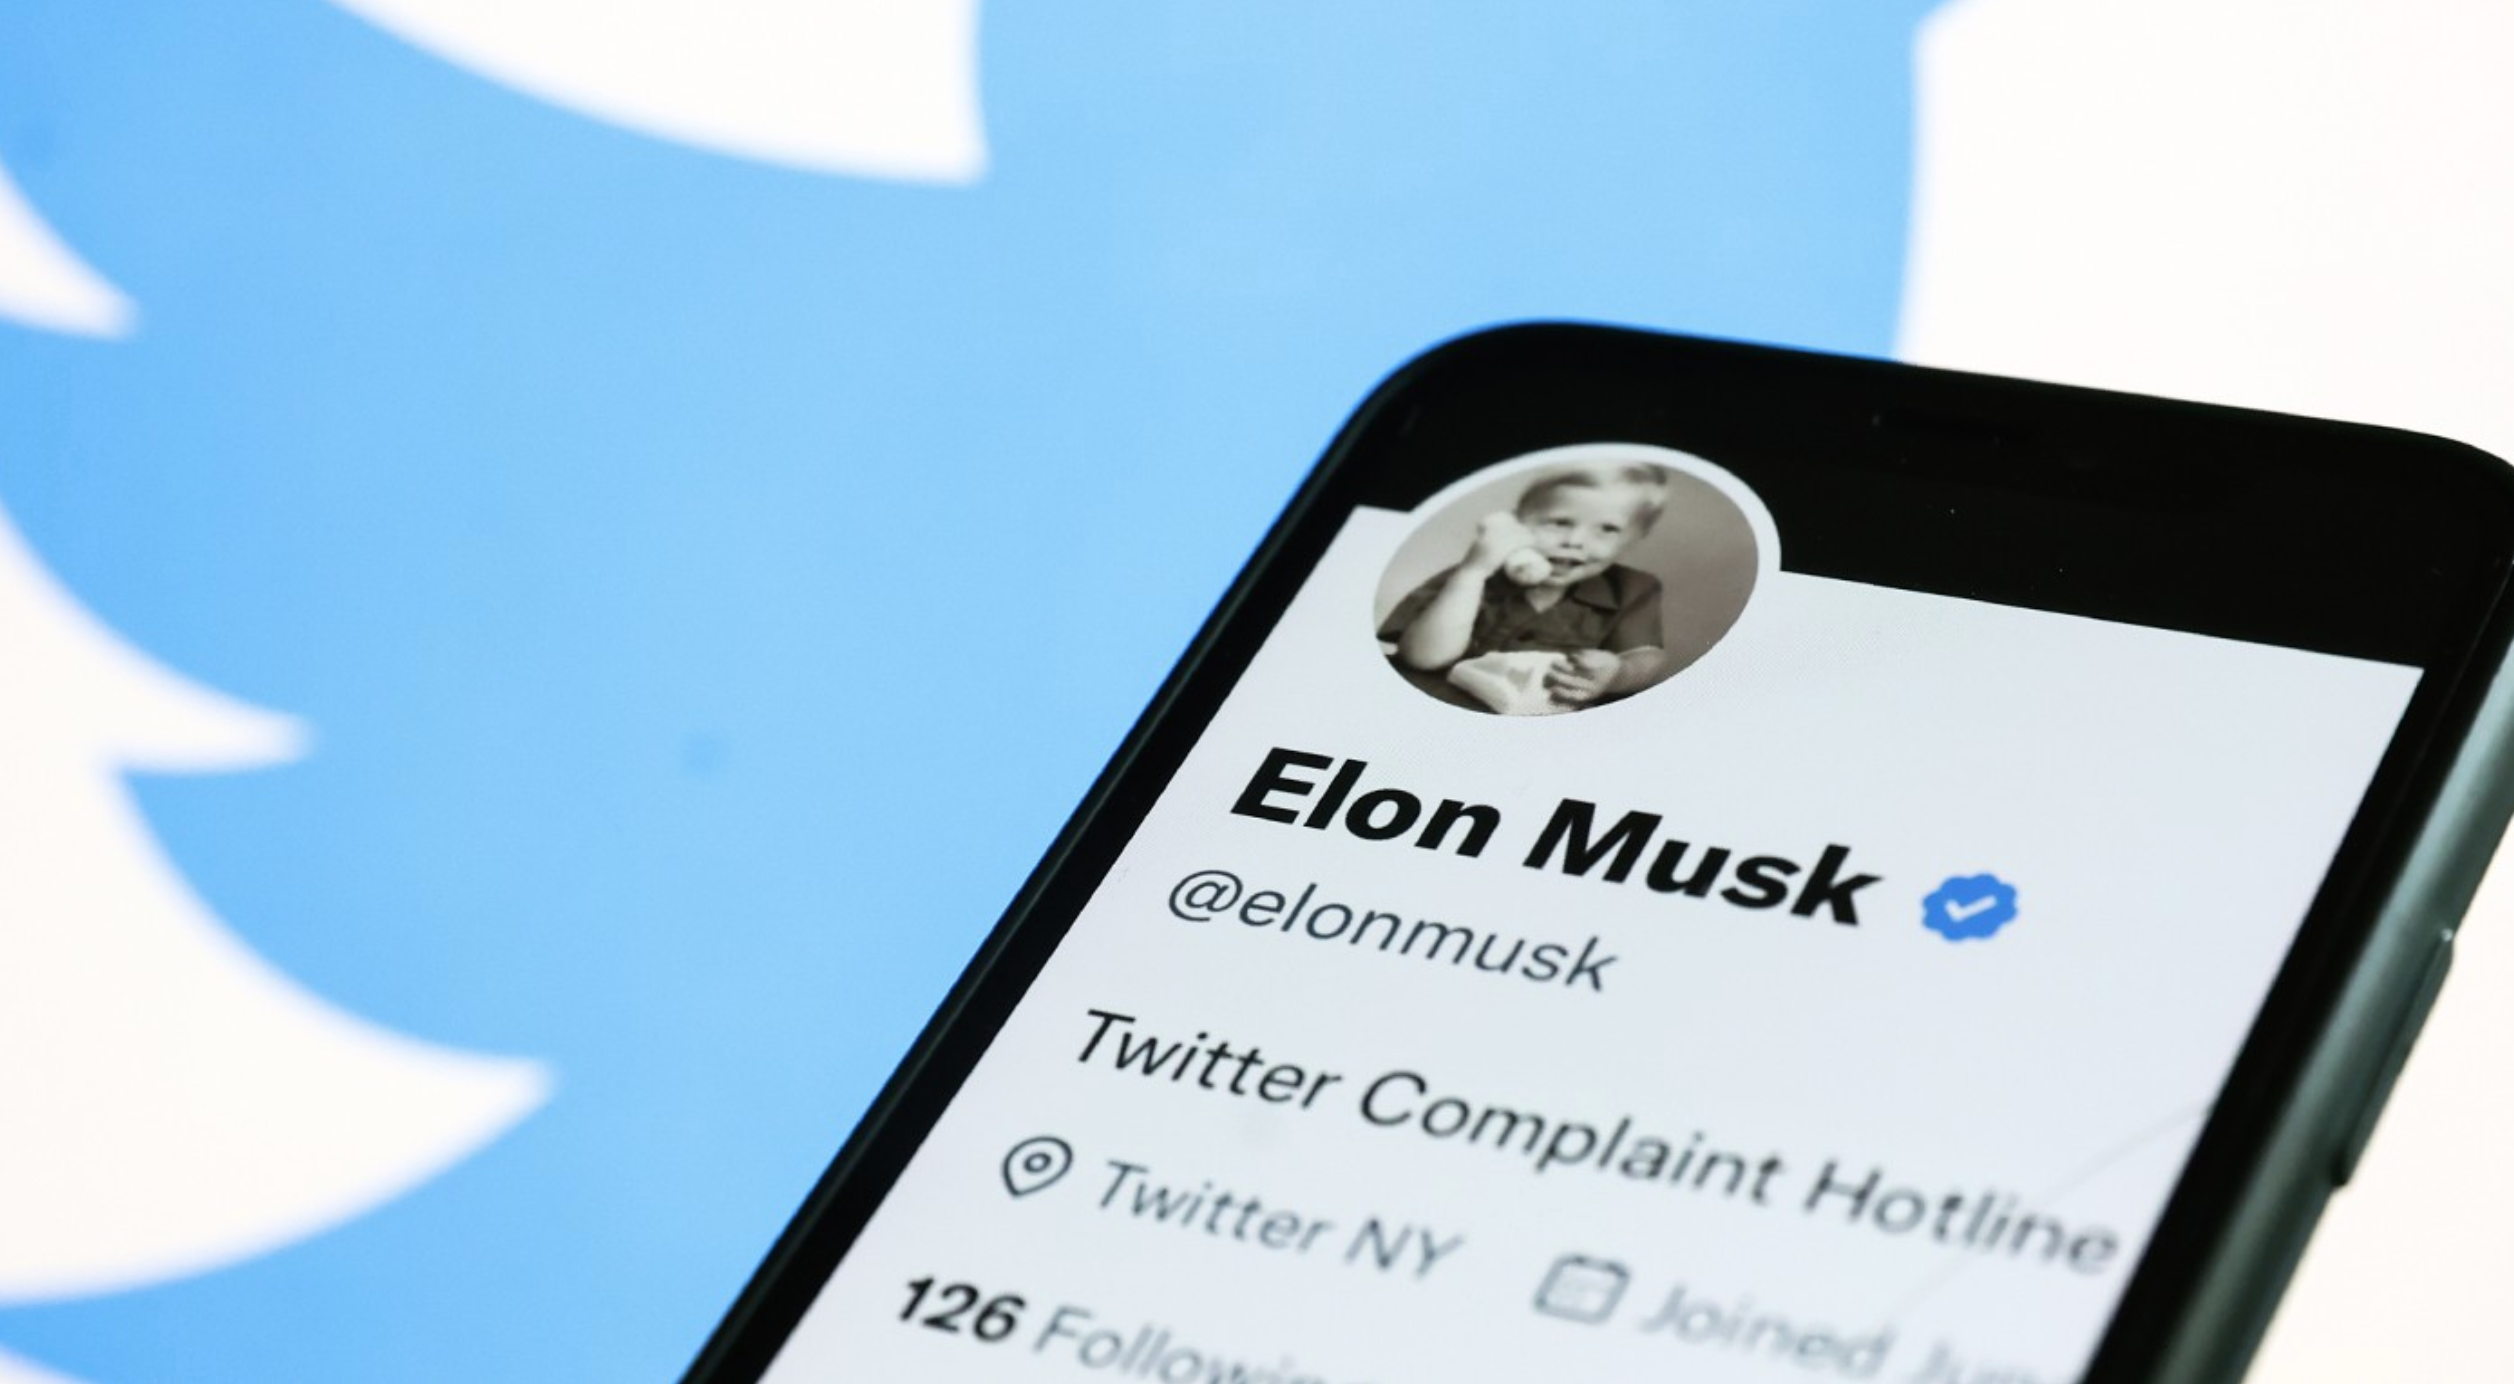 Elon Musk Announces Long-Form Text for Twitter